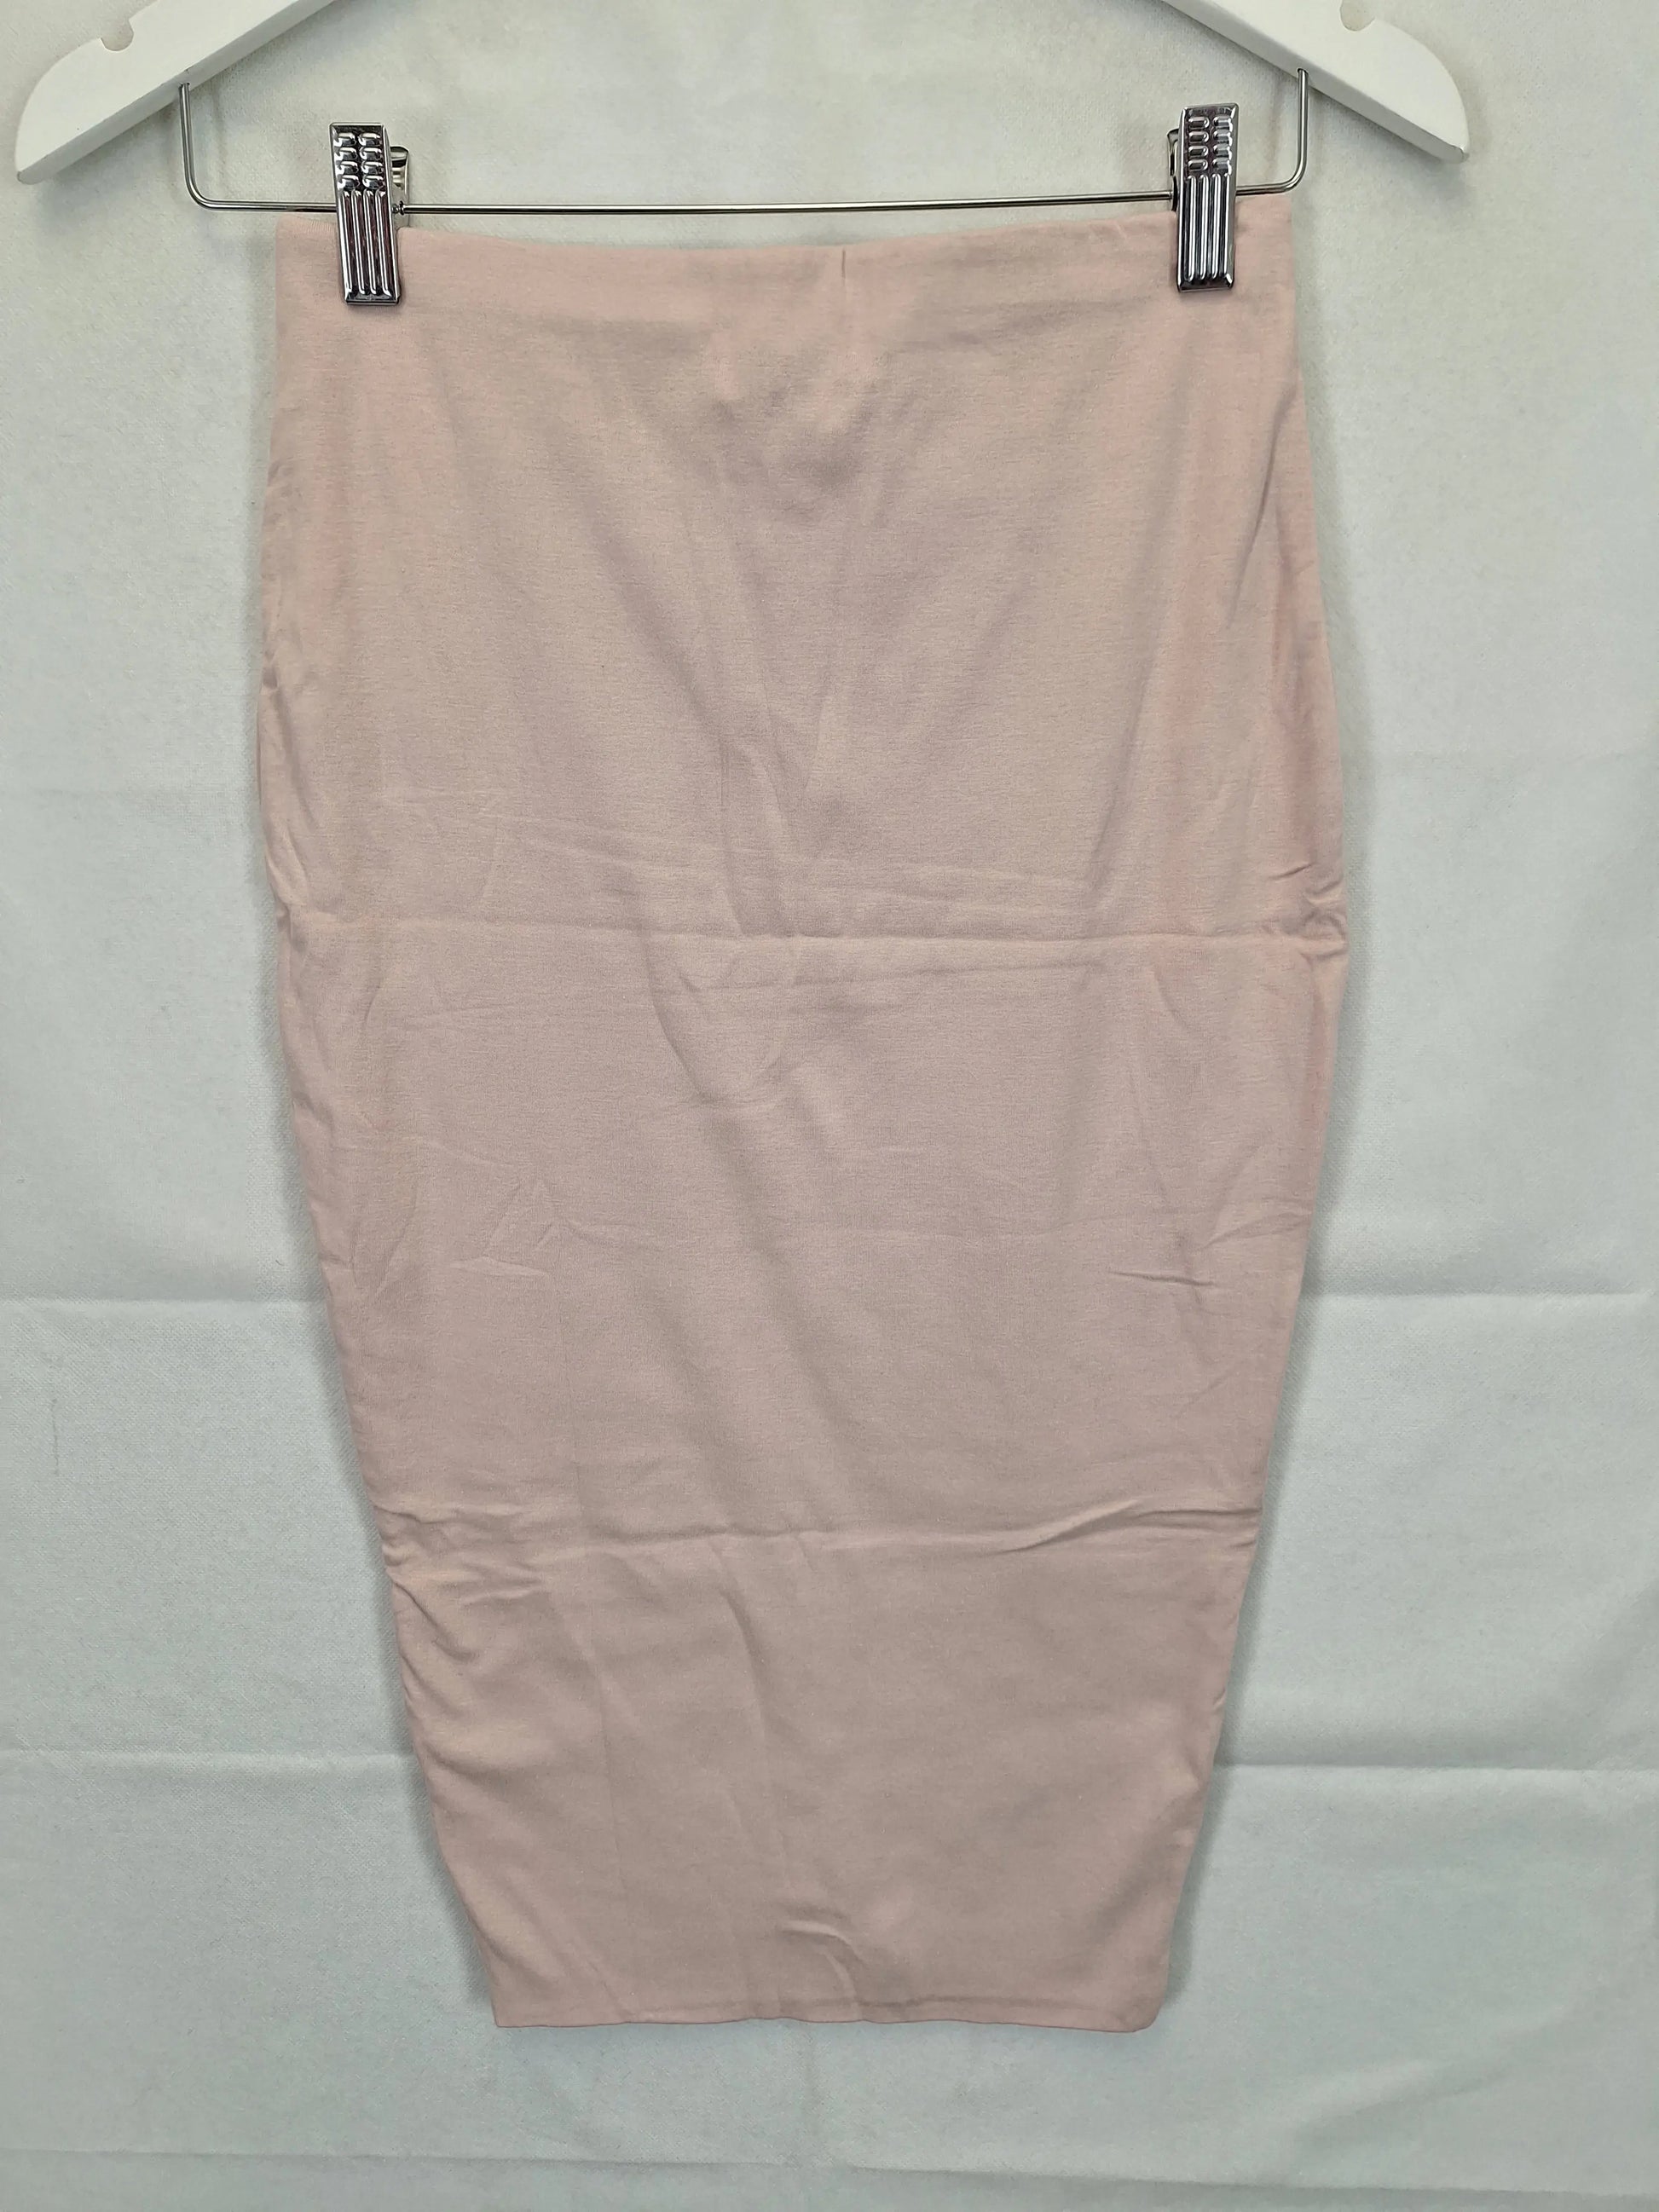 Kookai Sugar Chic Midi Skirt Size 8 by SwapUp-Online Second Hand Store-Online Thrift Store